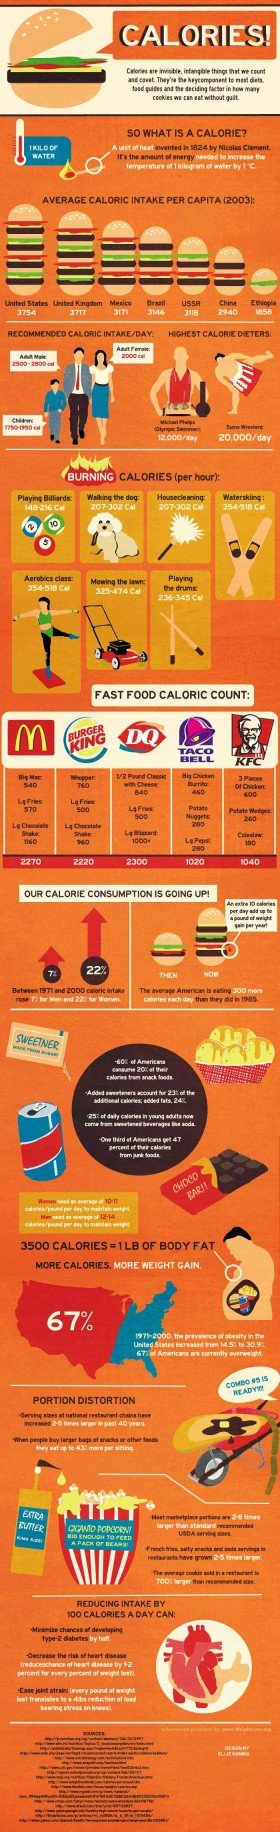 Calories info